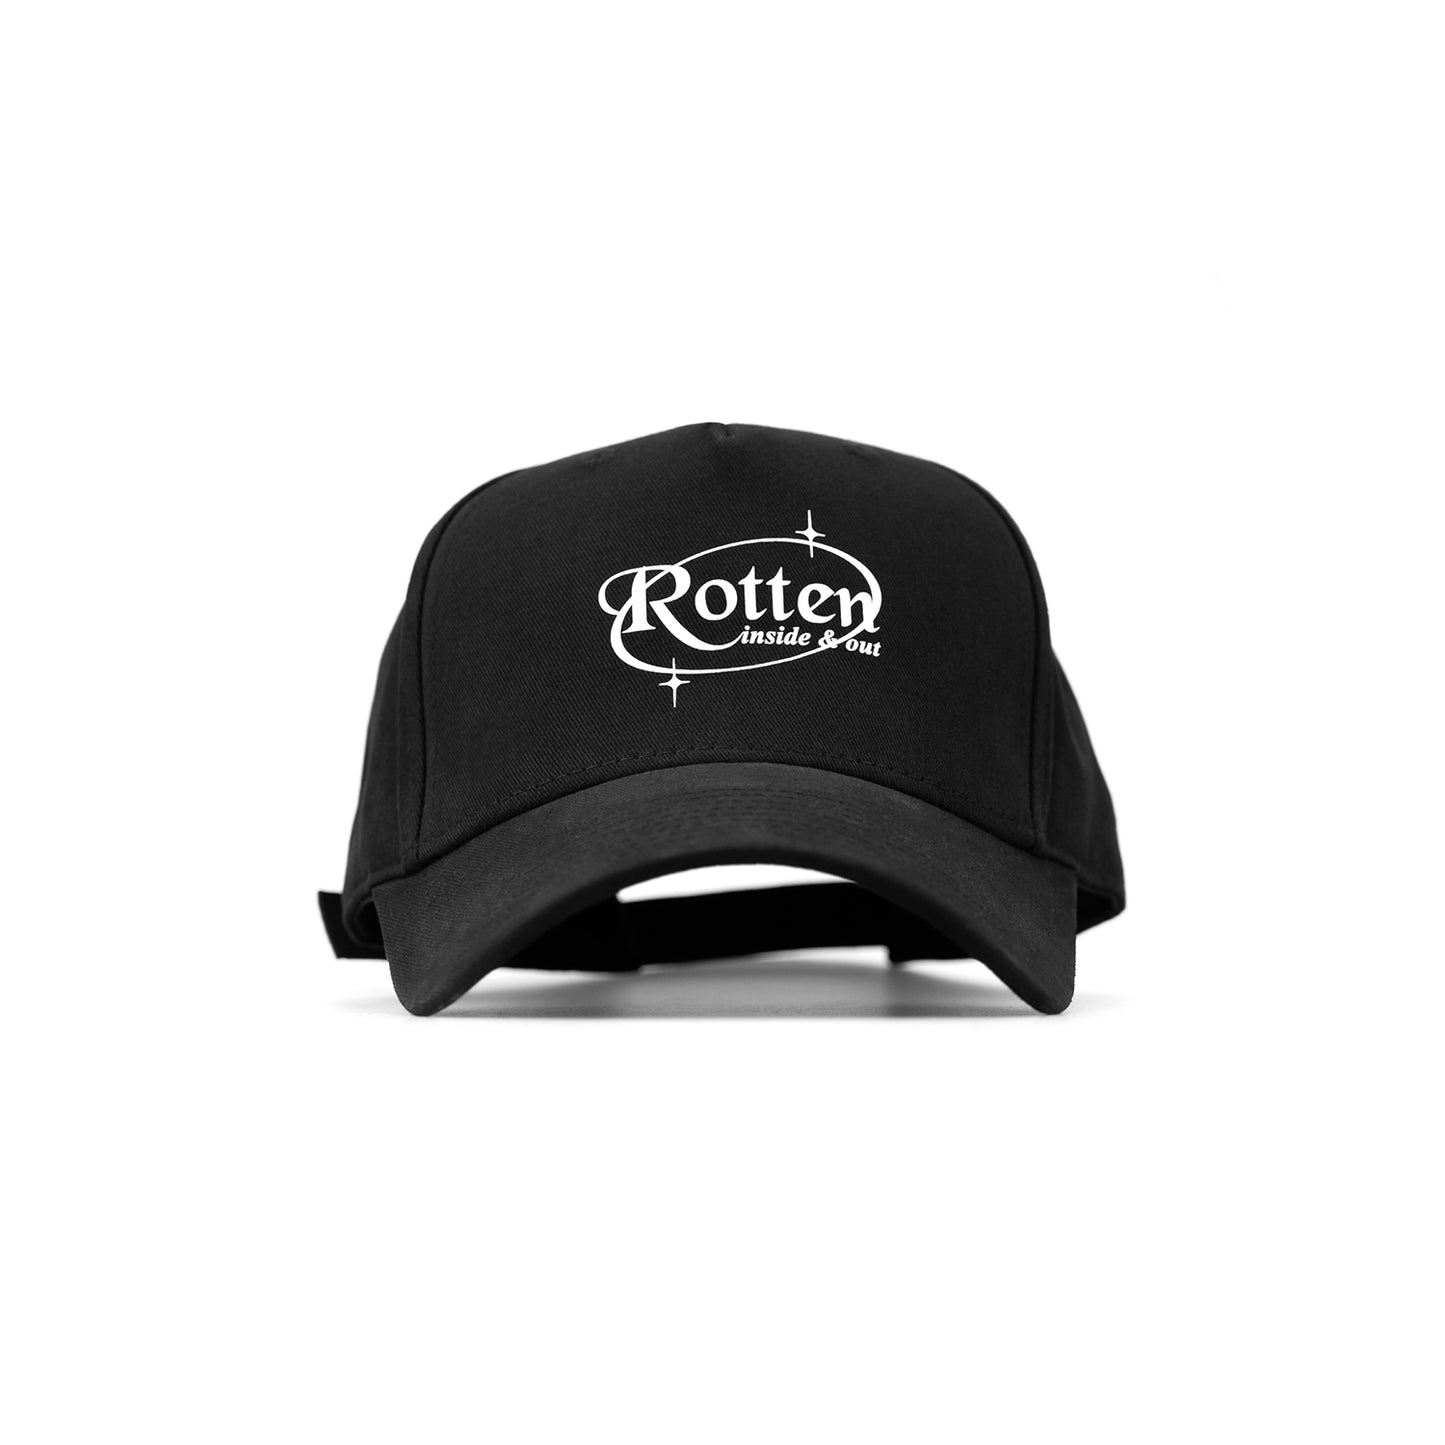 Rotten inside & out hat